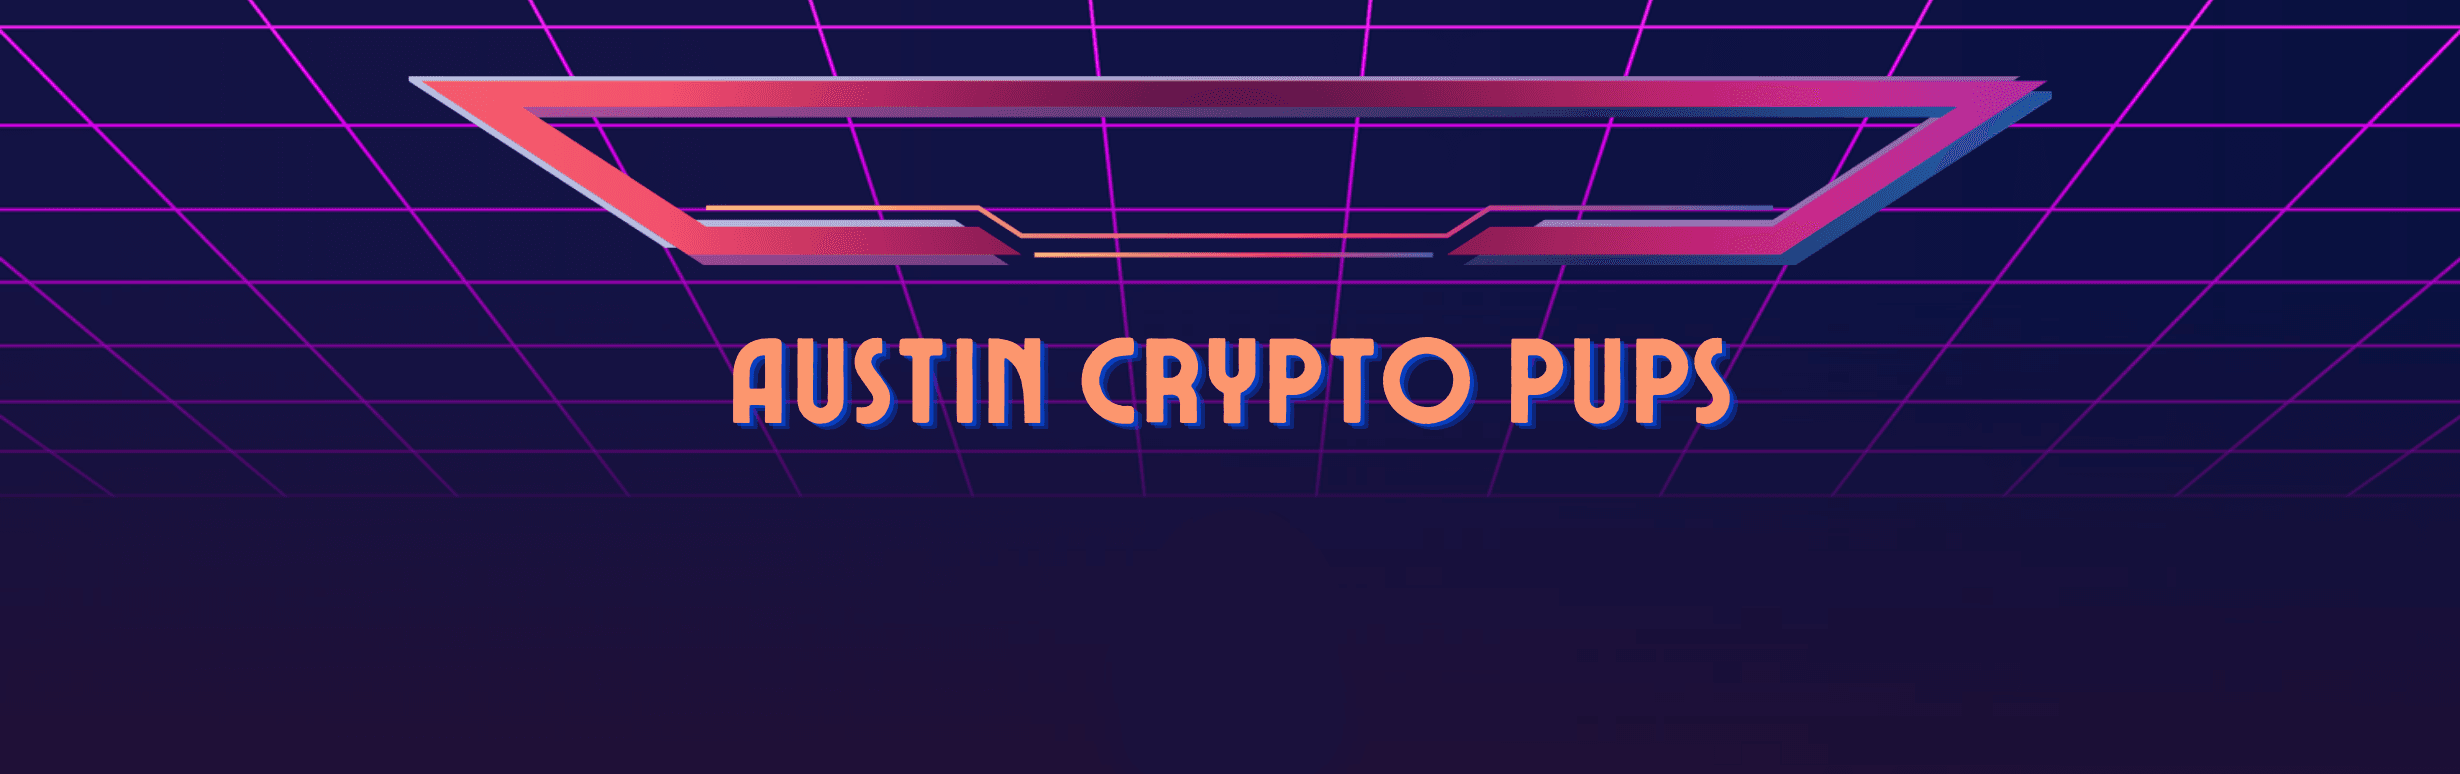 AustinCryptoPups 橫幅